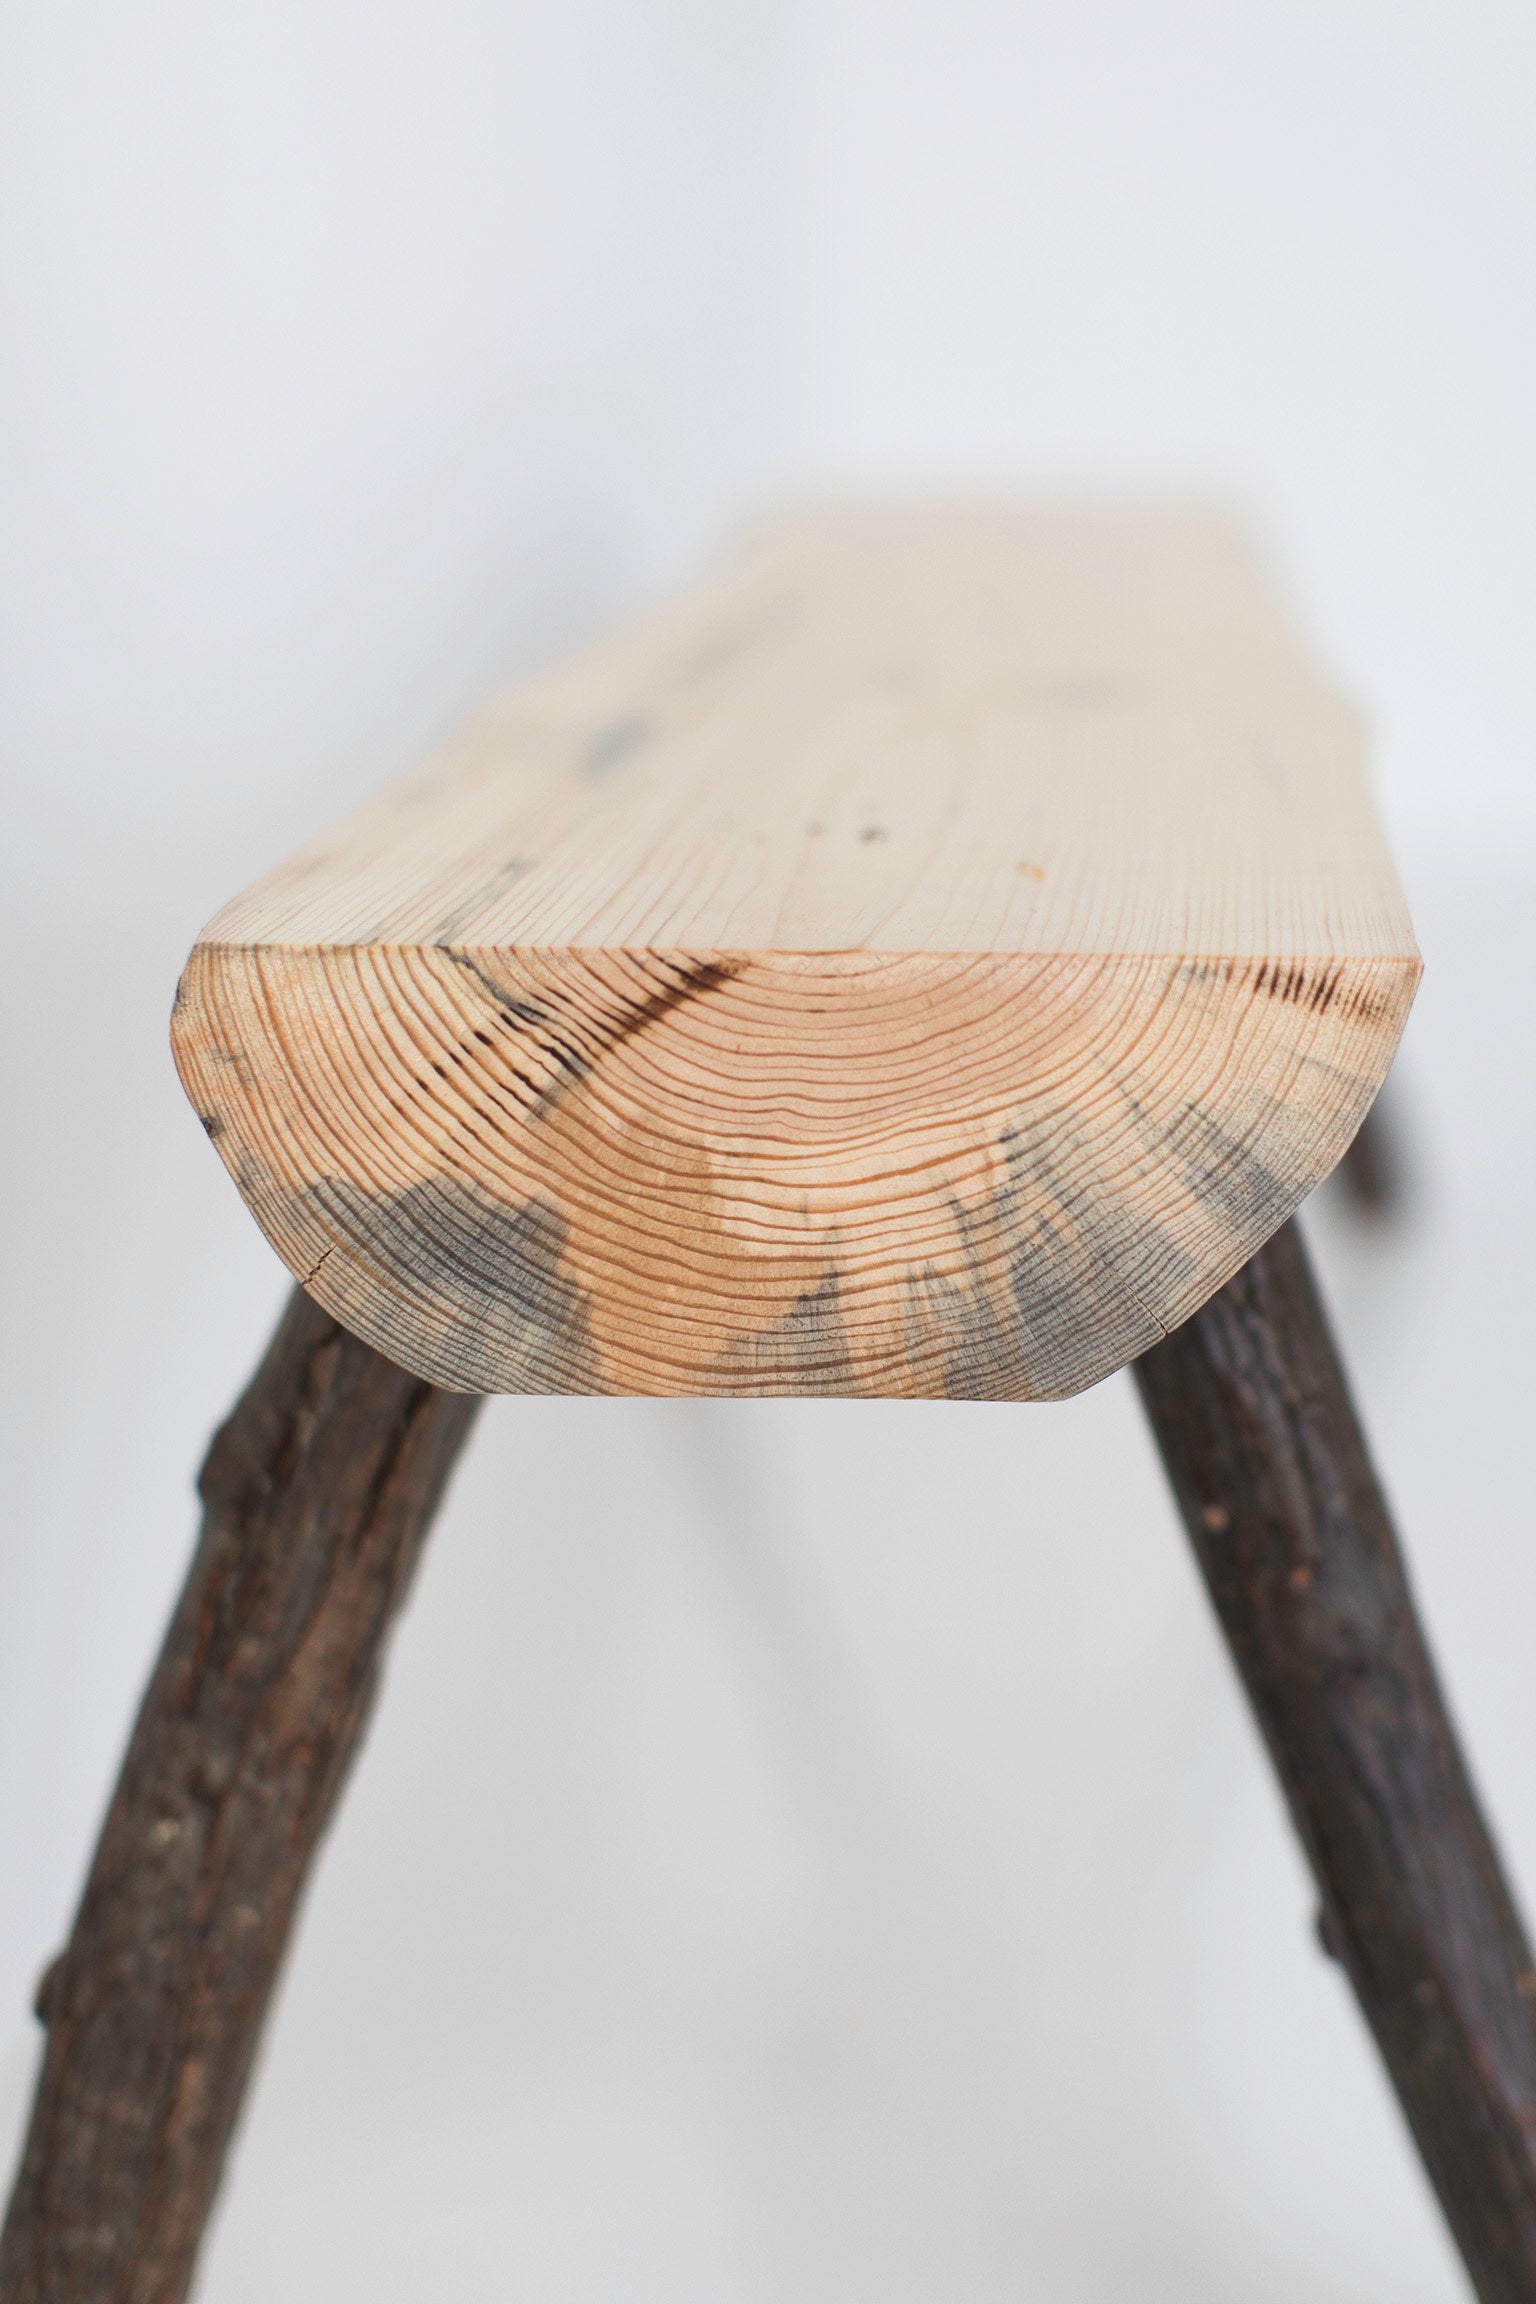 Wooden Bench - 0218